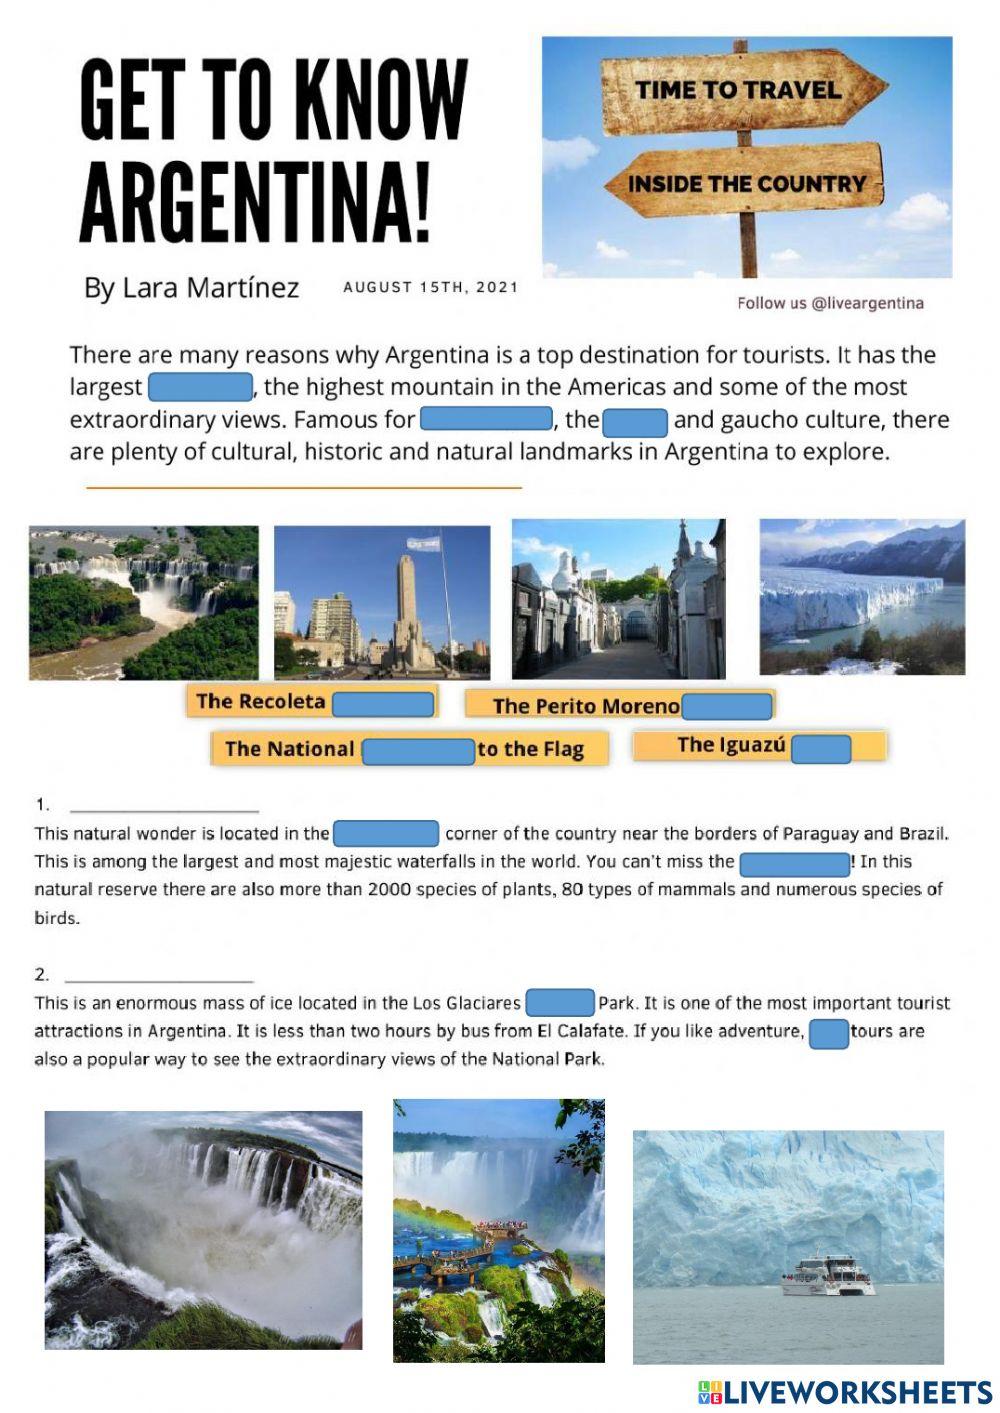 Landmarks in Argentina